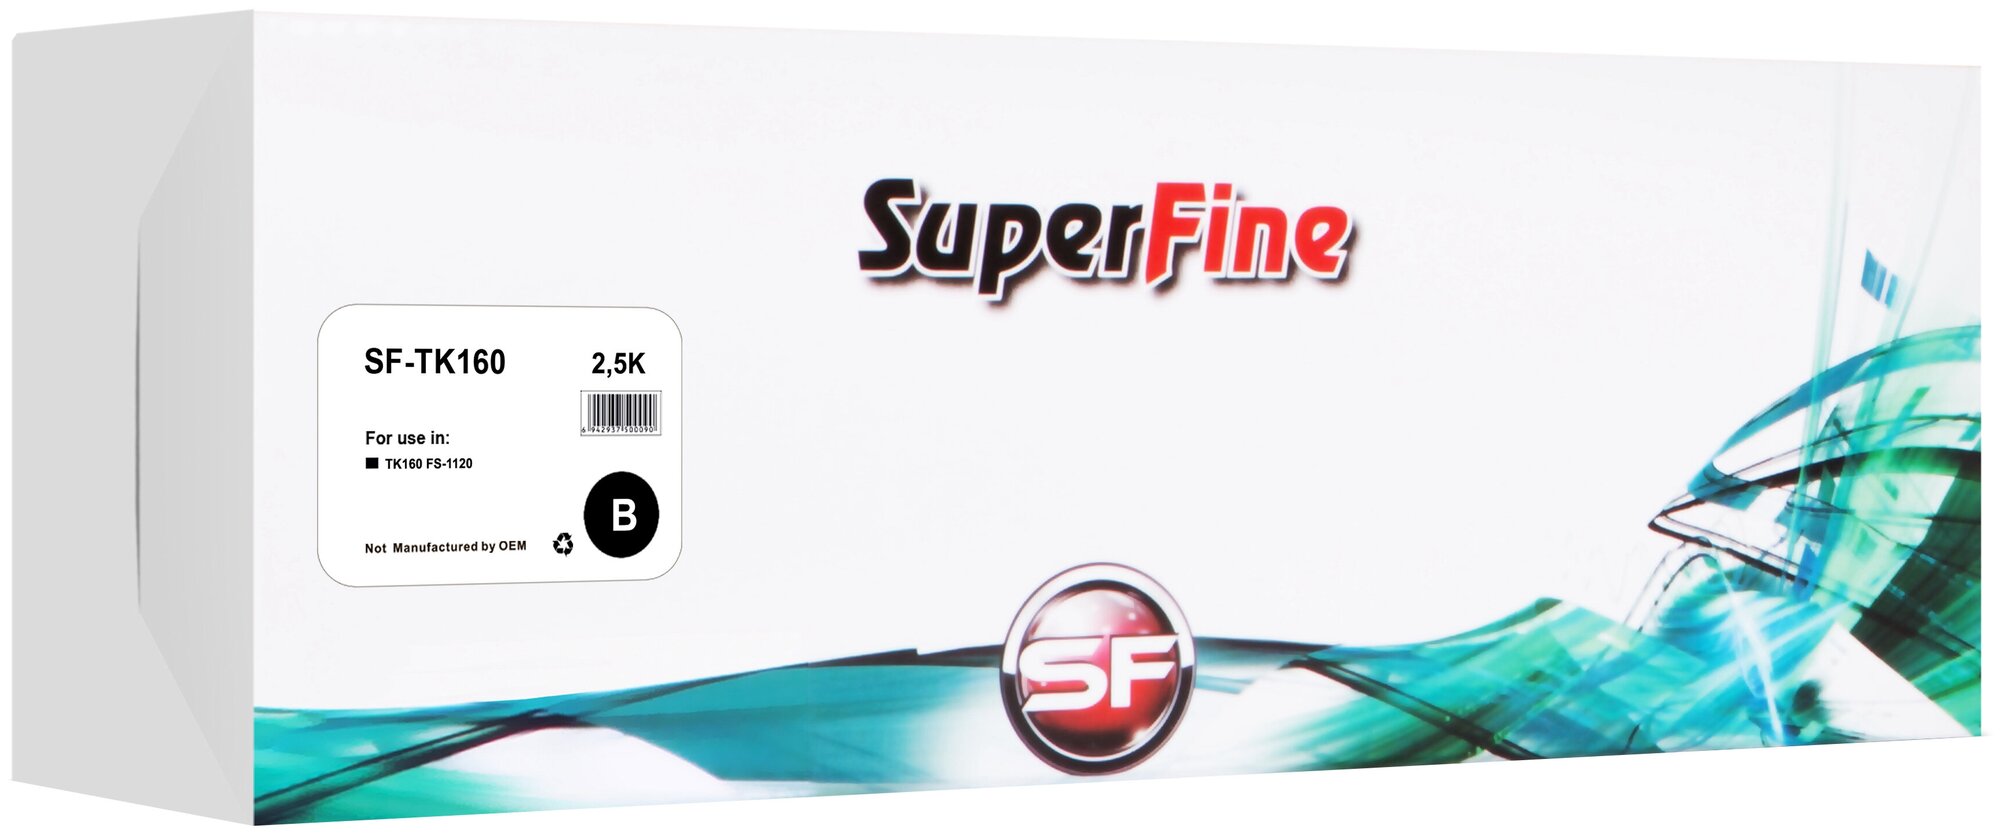 SuperFine Картридж Kyocera TK160 FS-1120 2.5K SuperFine